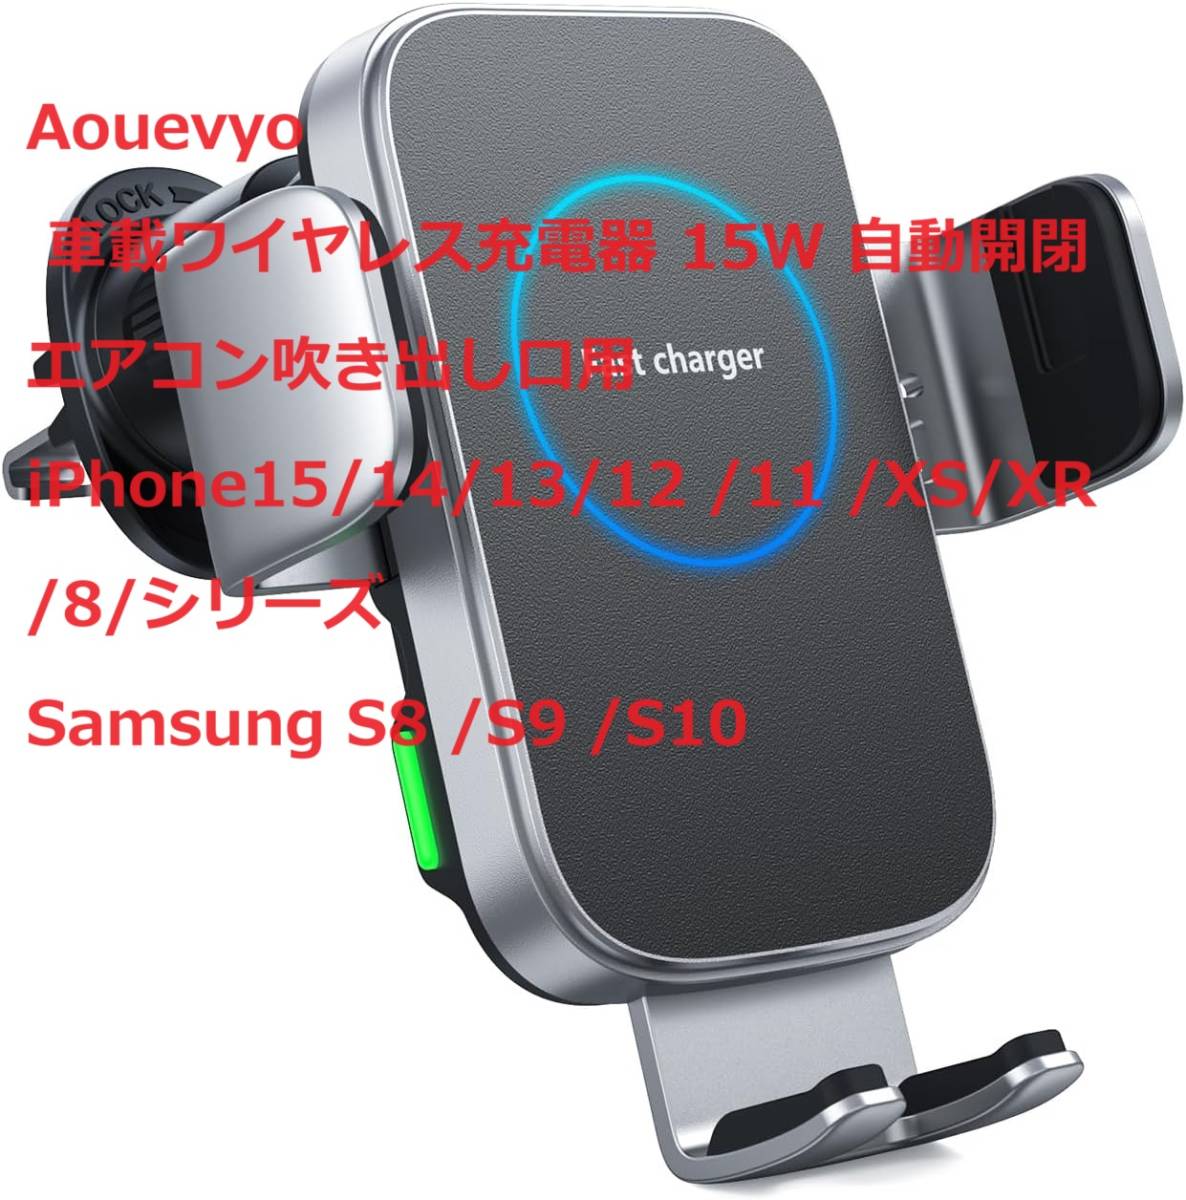 Aouevyo 車載ワイヤレス充電器 15W 自動開閉 エアコン吹き出し口用 iPhone15/14/13/12 /11 /XS/XR /8/シリーズ Samsung S8 /S9 /S10_画像1